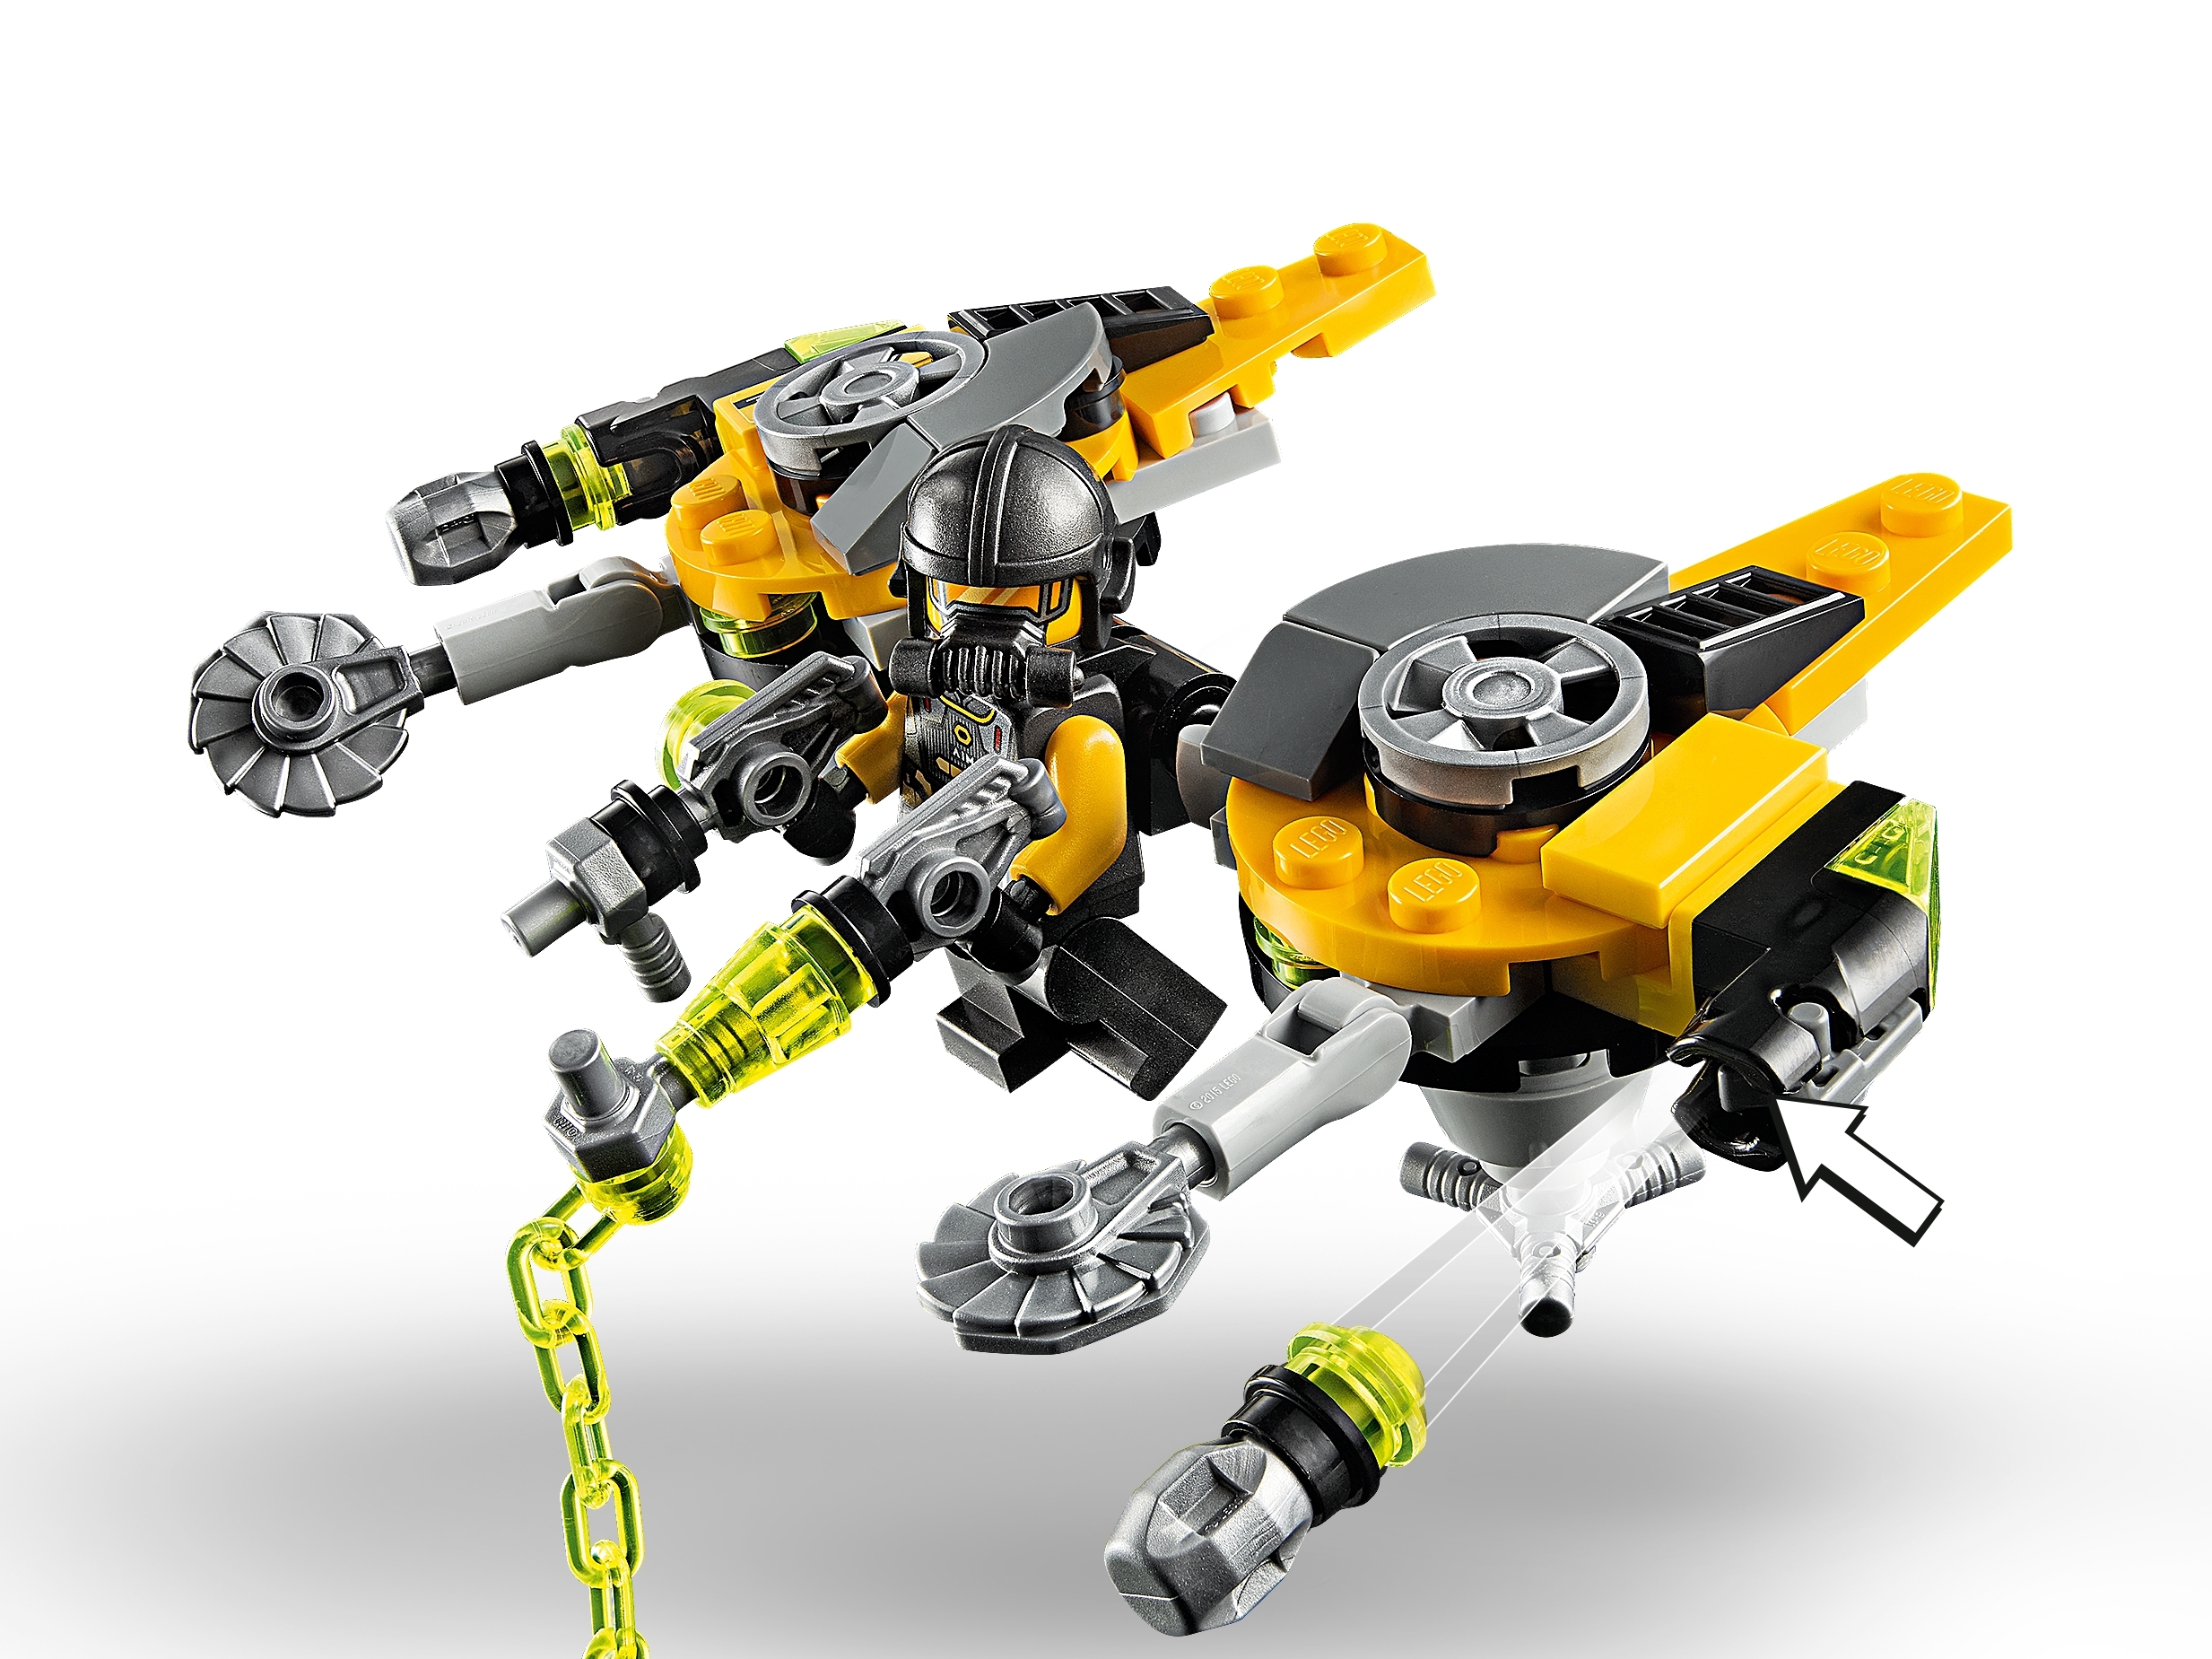 LEGO 76142 Marvel Avengers Speeder Bike Attack 226 Piece Building Set Toy 2020 